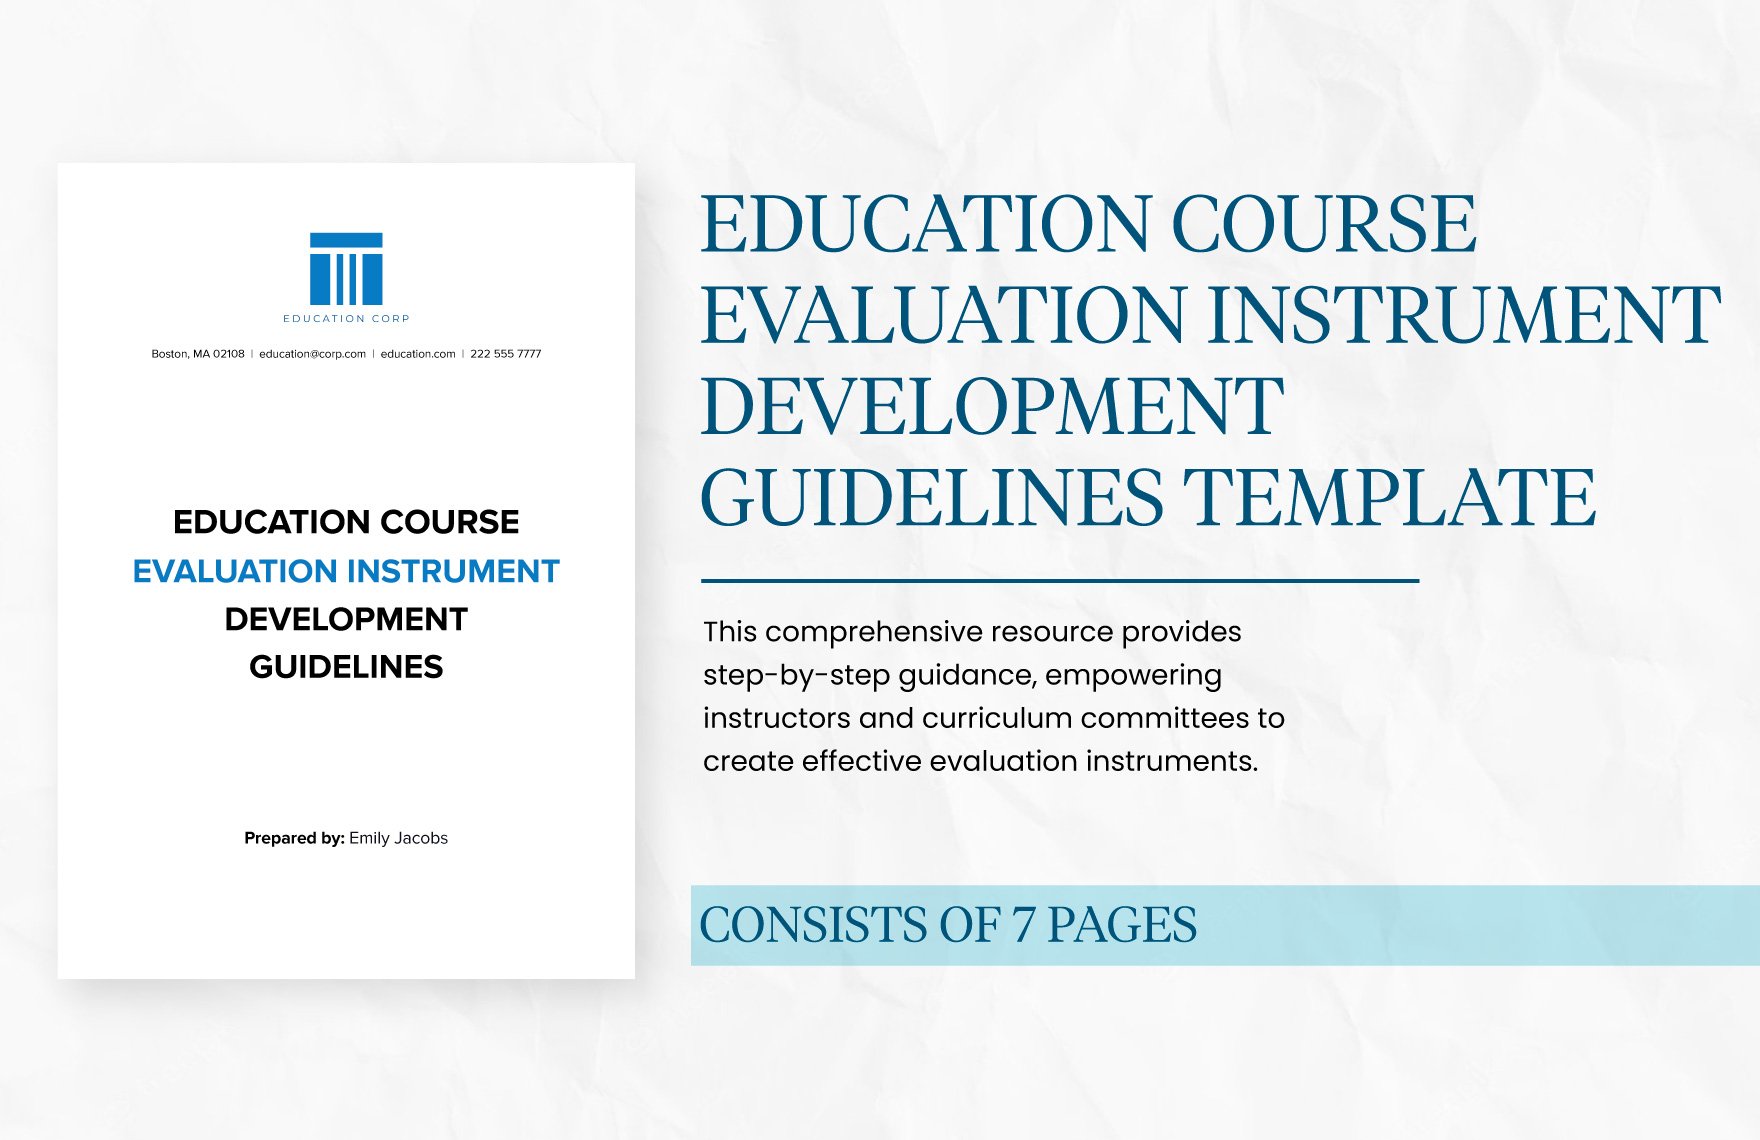 Education Course Evaluation Instrument Development Guidelines Template